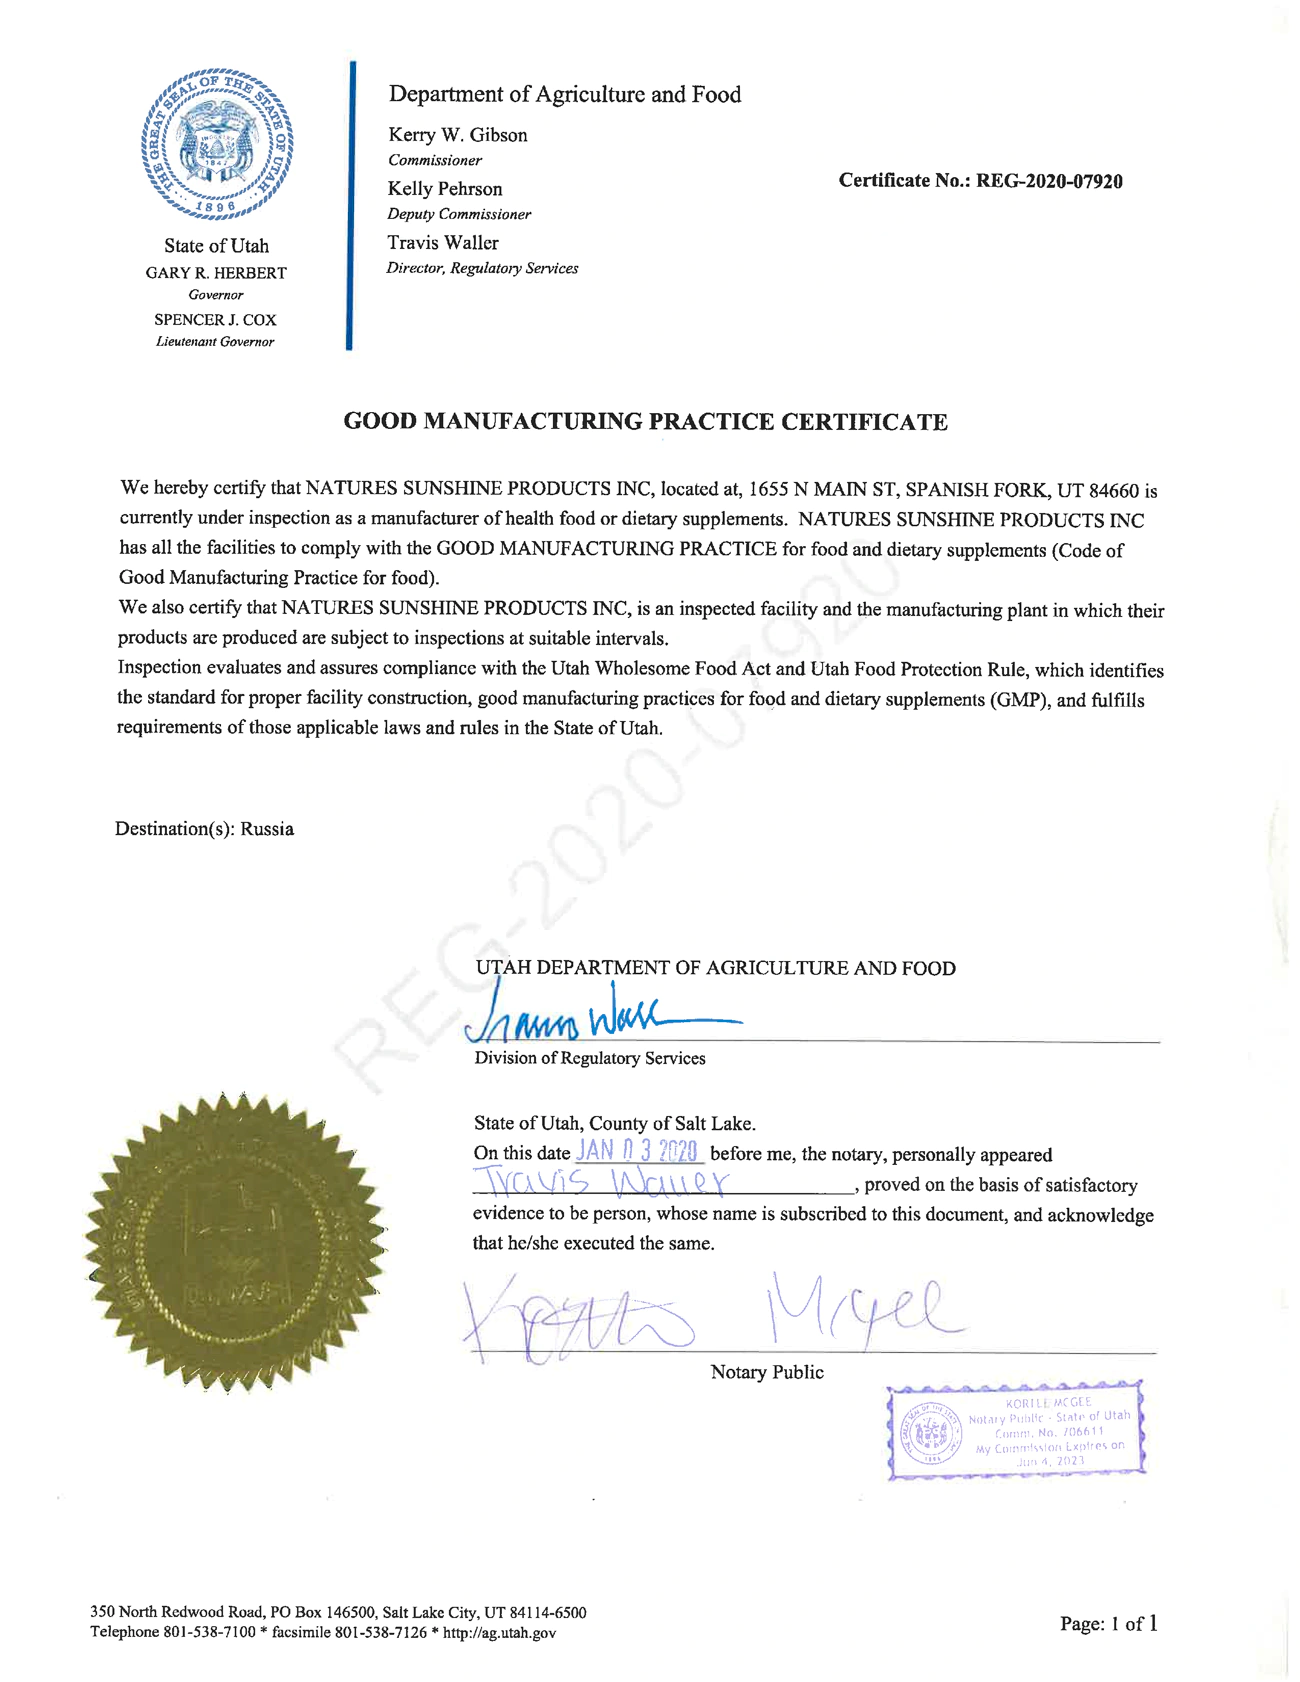 Сертифика GMP компании NSP (Nature's Sunshine Products) | NSP-MOLDOVA.MD